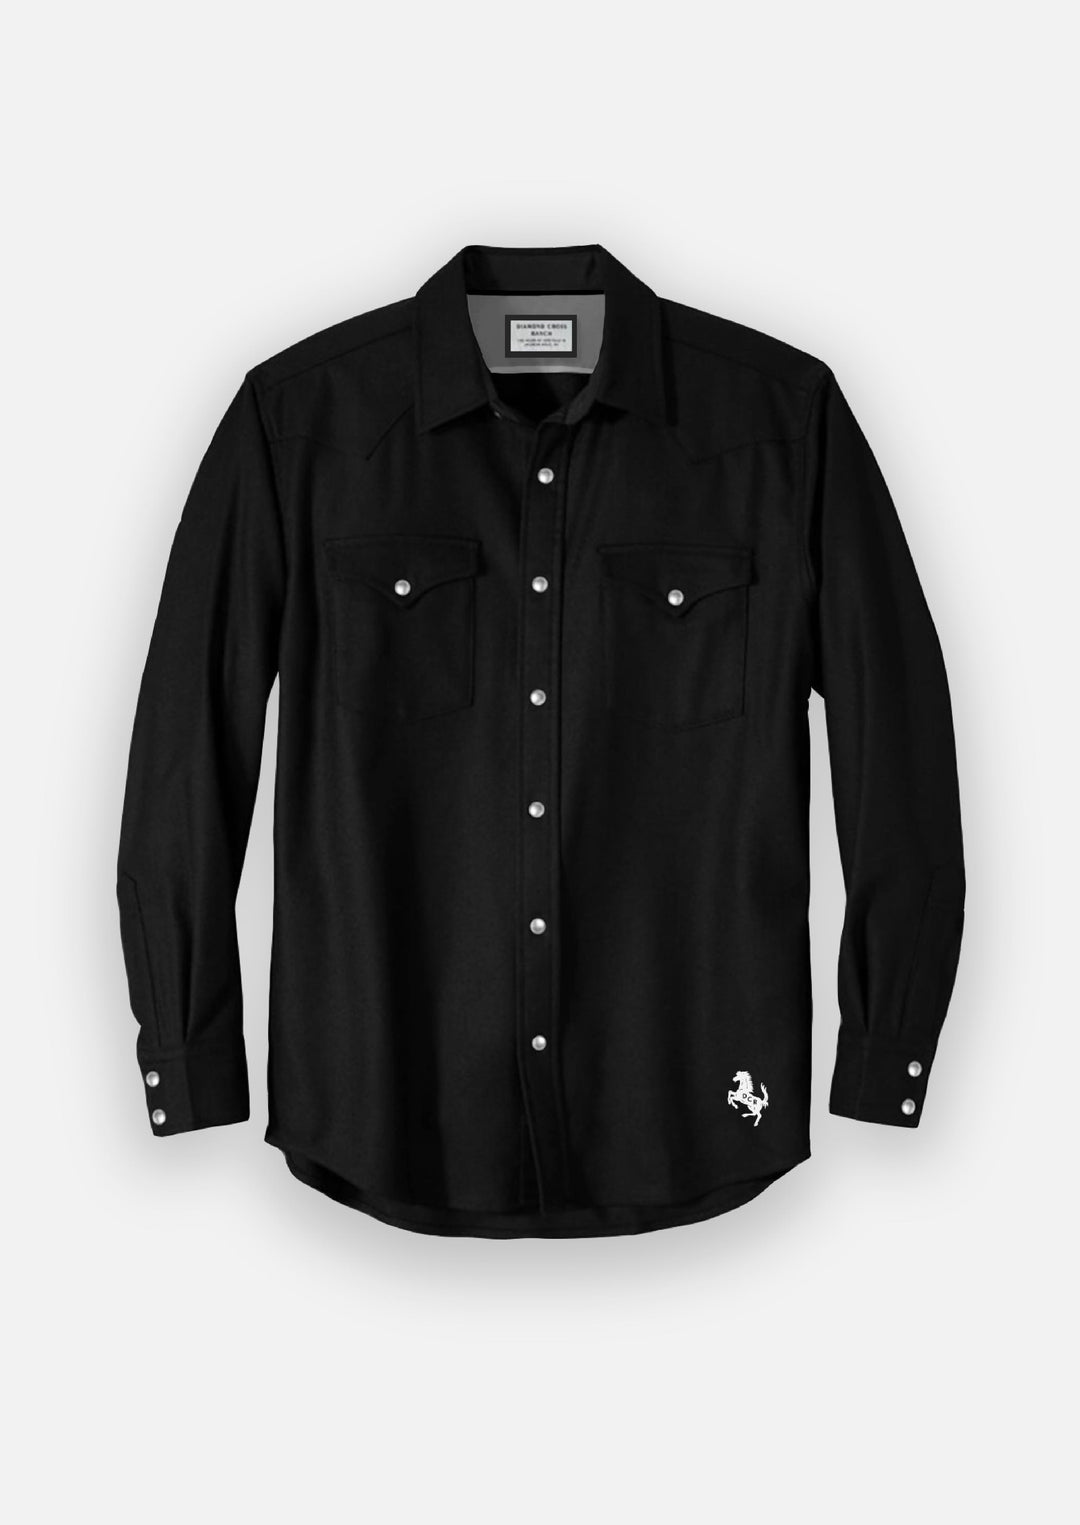 Diamond Cross Ranch Wyoming Black Cowboy Shirt